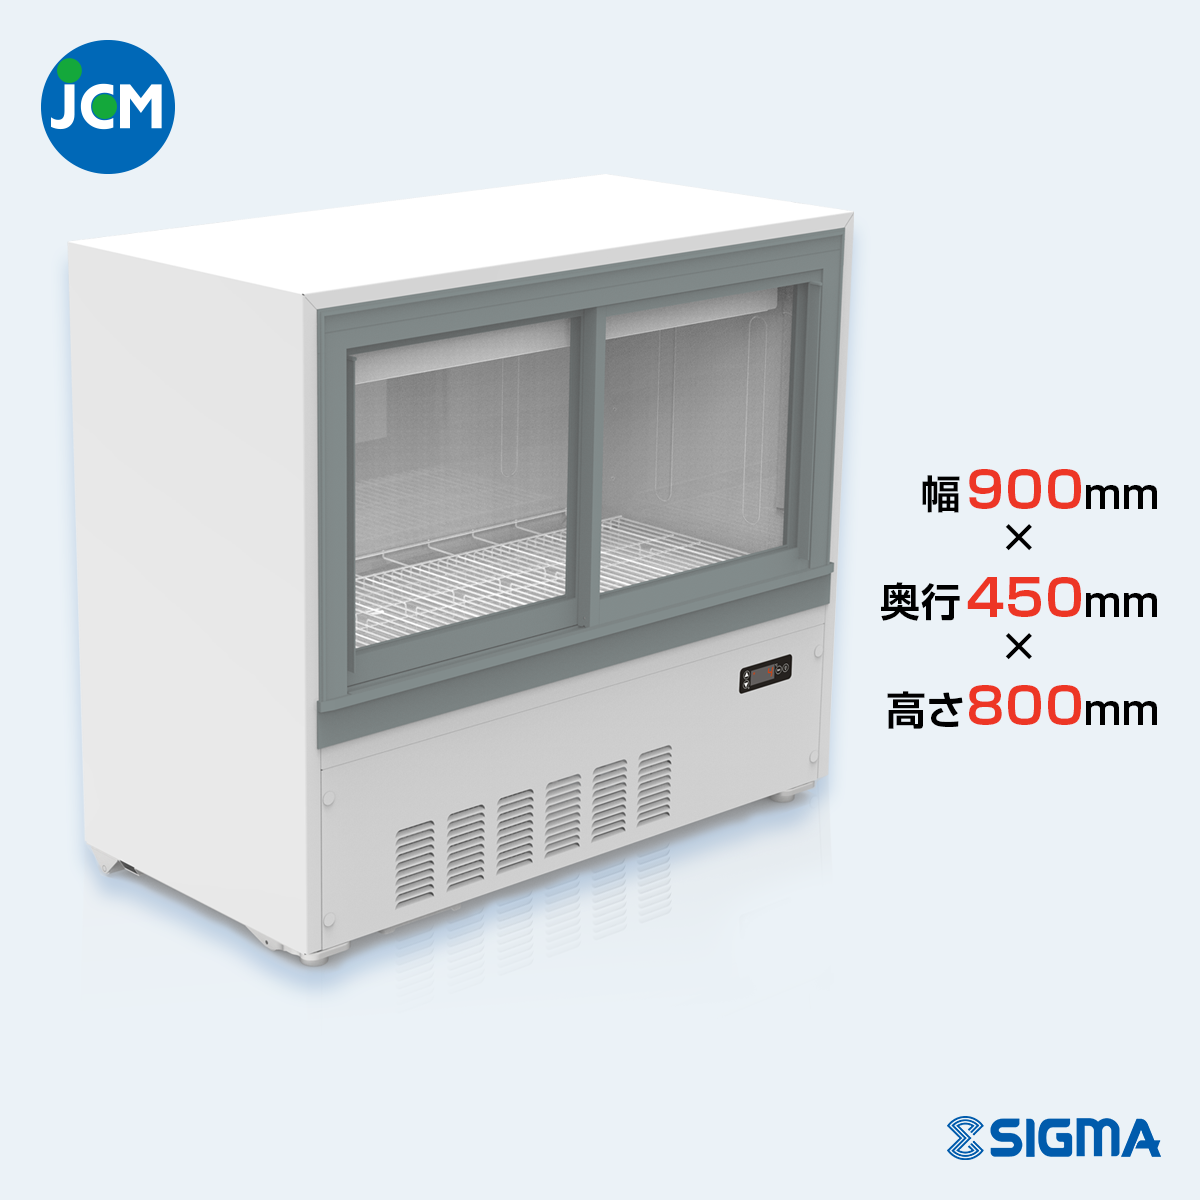 JCMS-105B 箱型冷蔵ショーケース／ビールショーケース キュービック 幅900×奥行450×高さ800mm